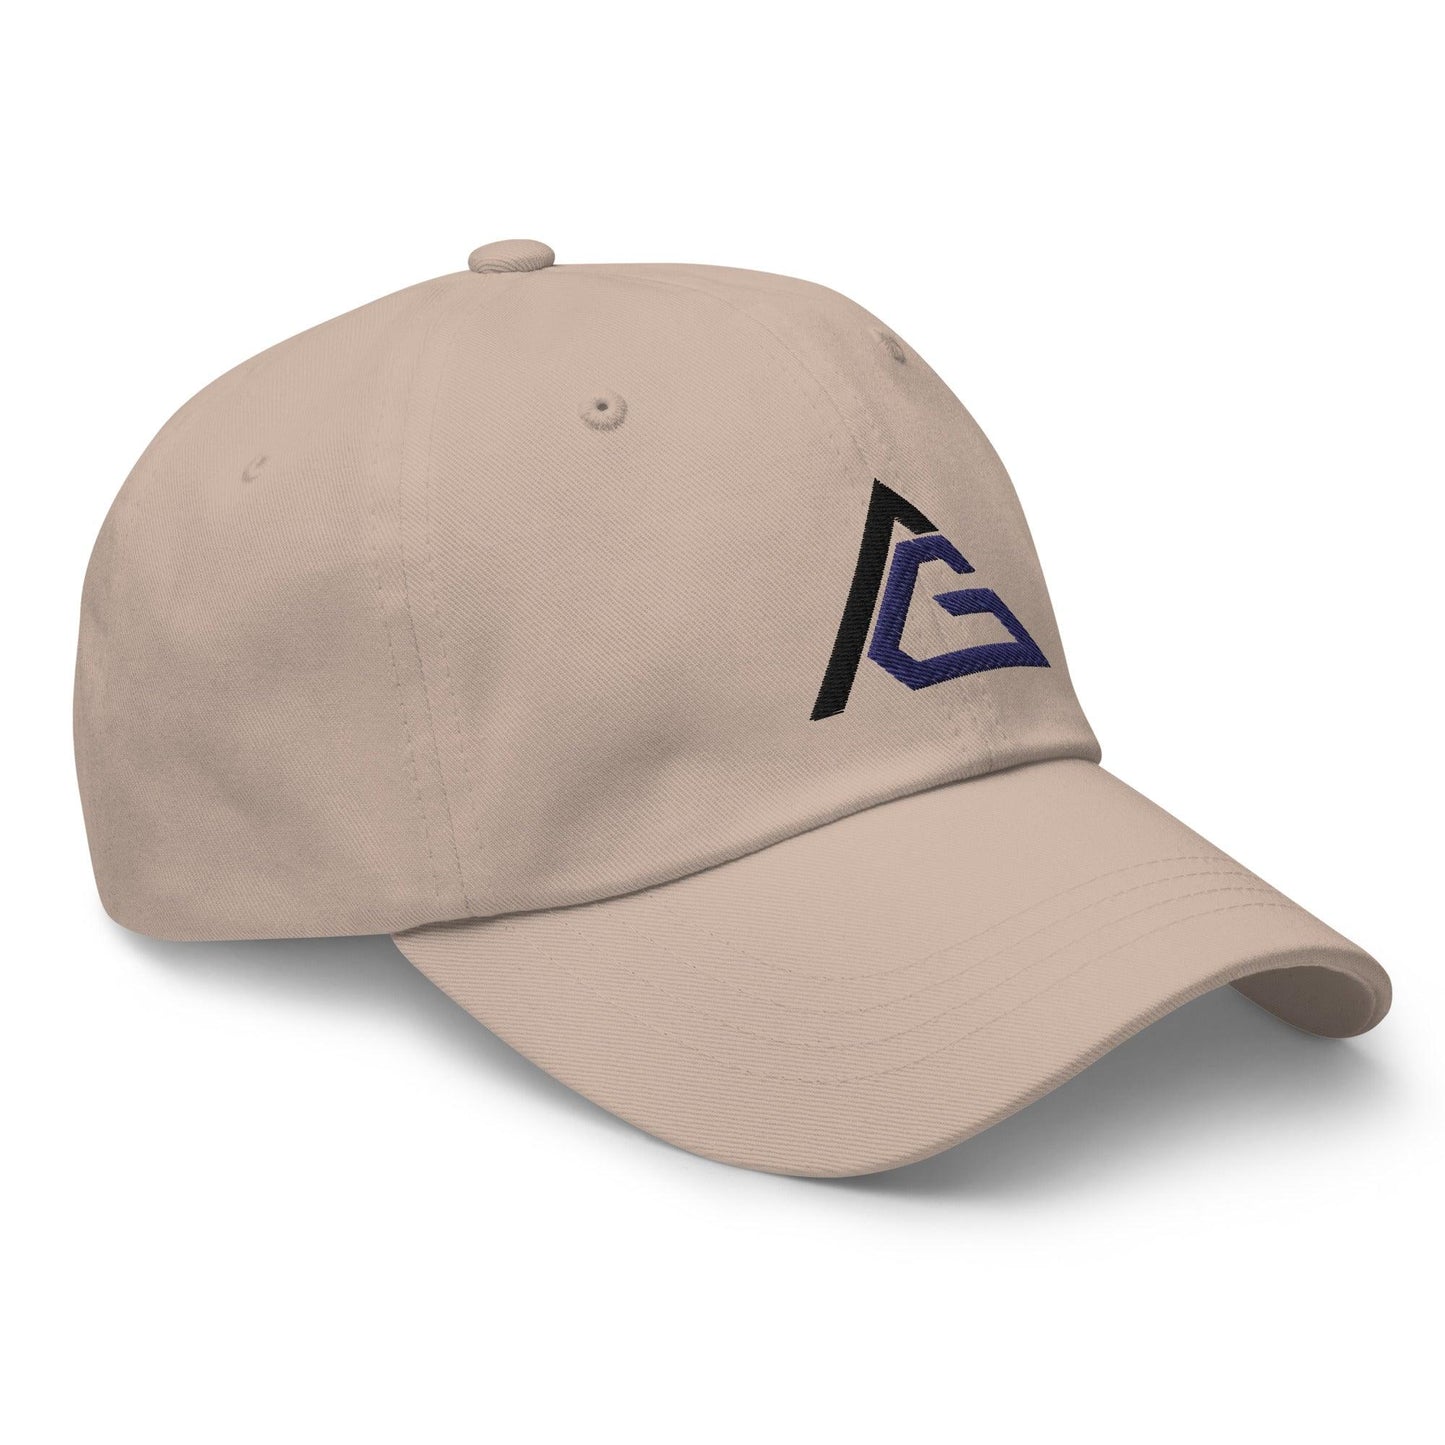 Austin Gomber "Elite" hat - Fan Arch